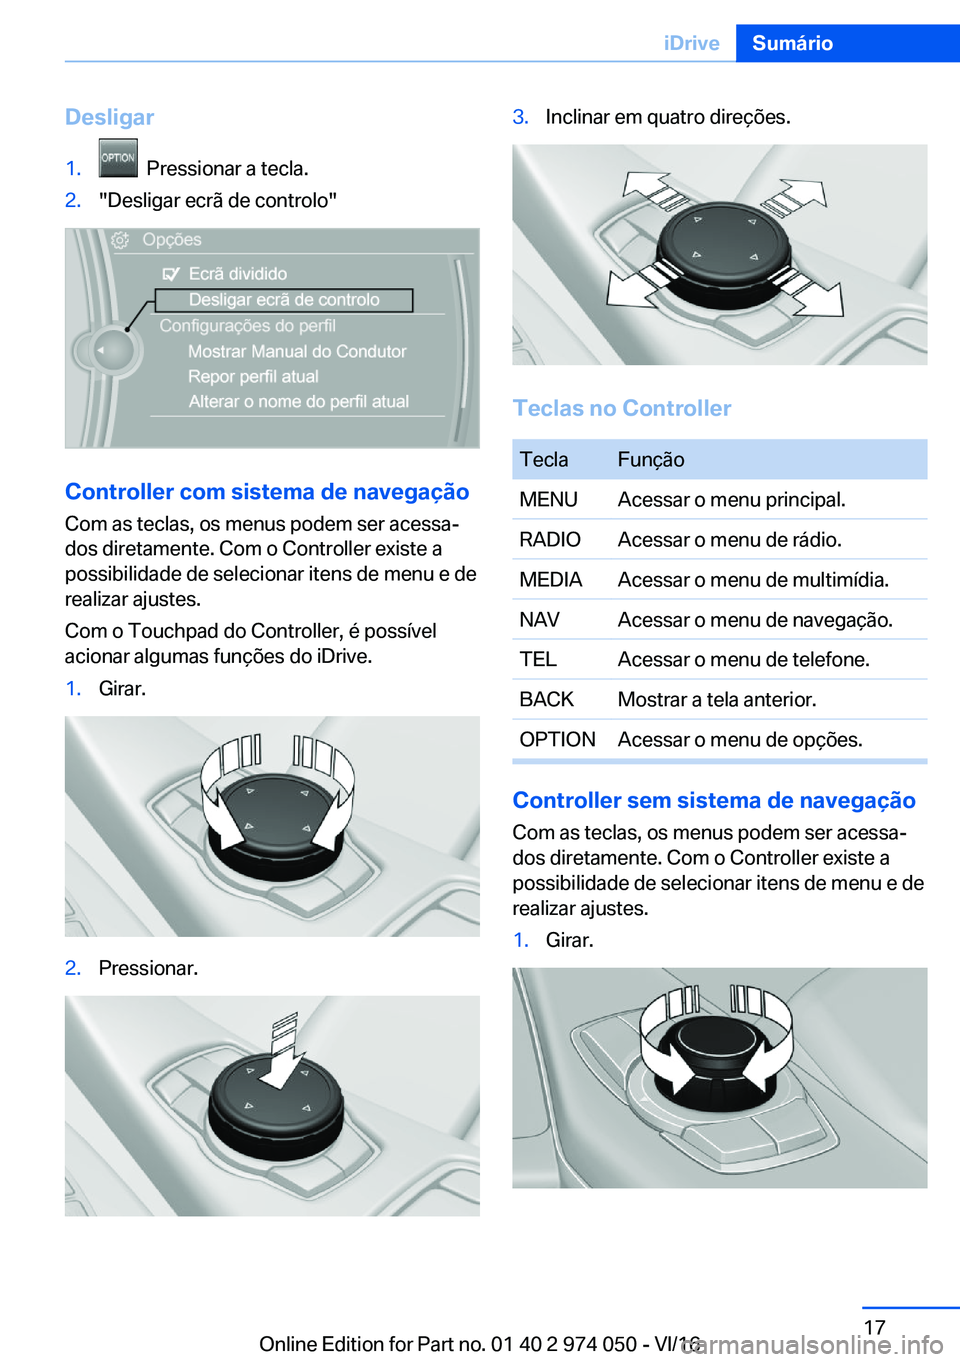 BMW M3 2017  Manual do condutor (in Portuguese) �D�e�s�l�i�g�a�r�1�.� � �P�r�e�s�s�i�o�n�a�r� �a� �t�e�c�l�a�.�2�.�"�D�e�s�l�i�g�a�r� �e�c�r�ã� �d�e� �c�o�n�t�r�o�l�o�"
�C�o�n�t�r�o�l�l�e�r��c�o�m��s�i�s�t�e�m�a��d�e��n�a�v�e�g�a�